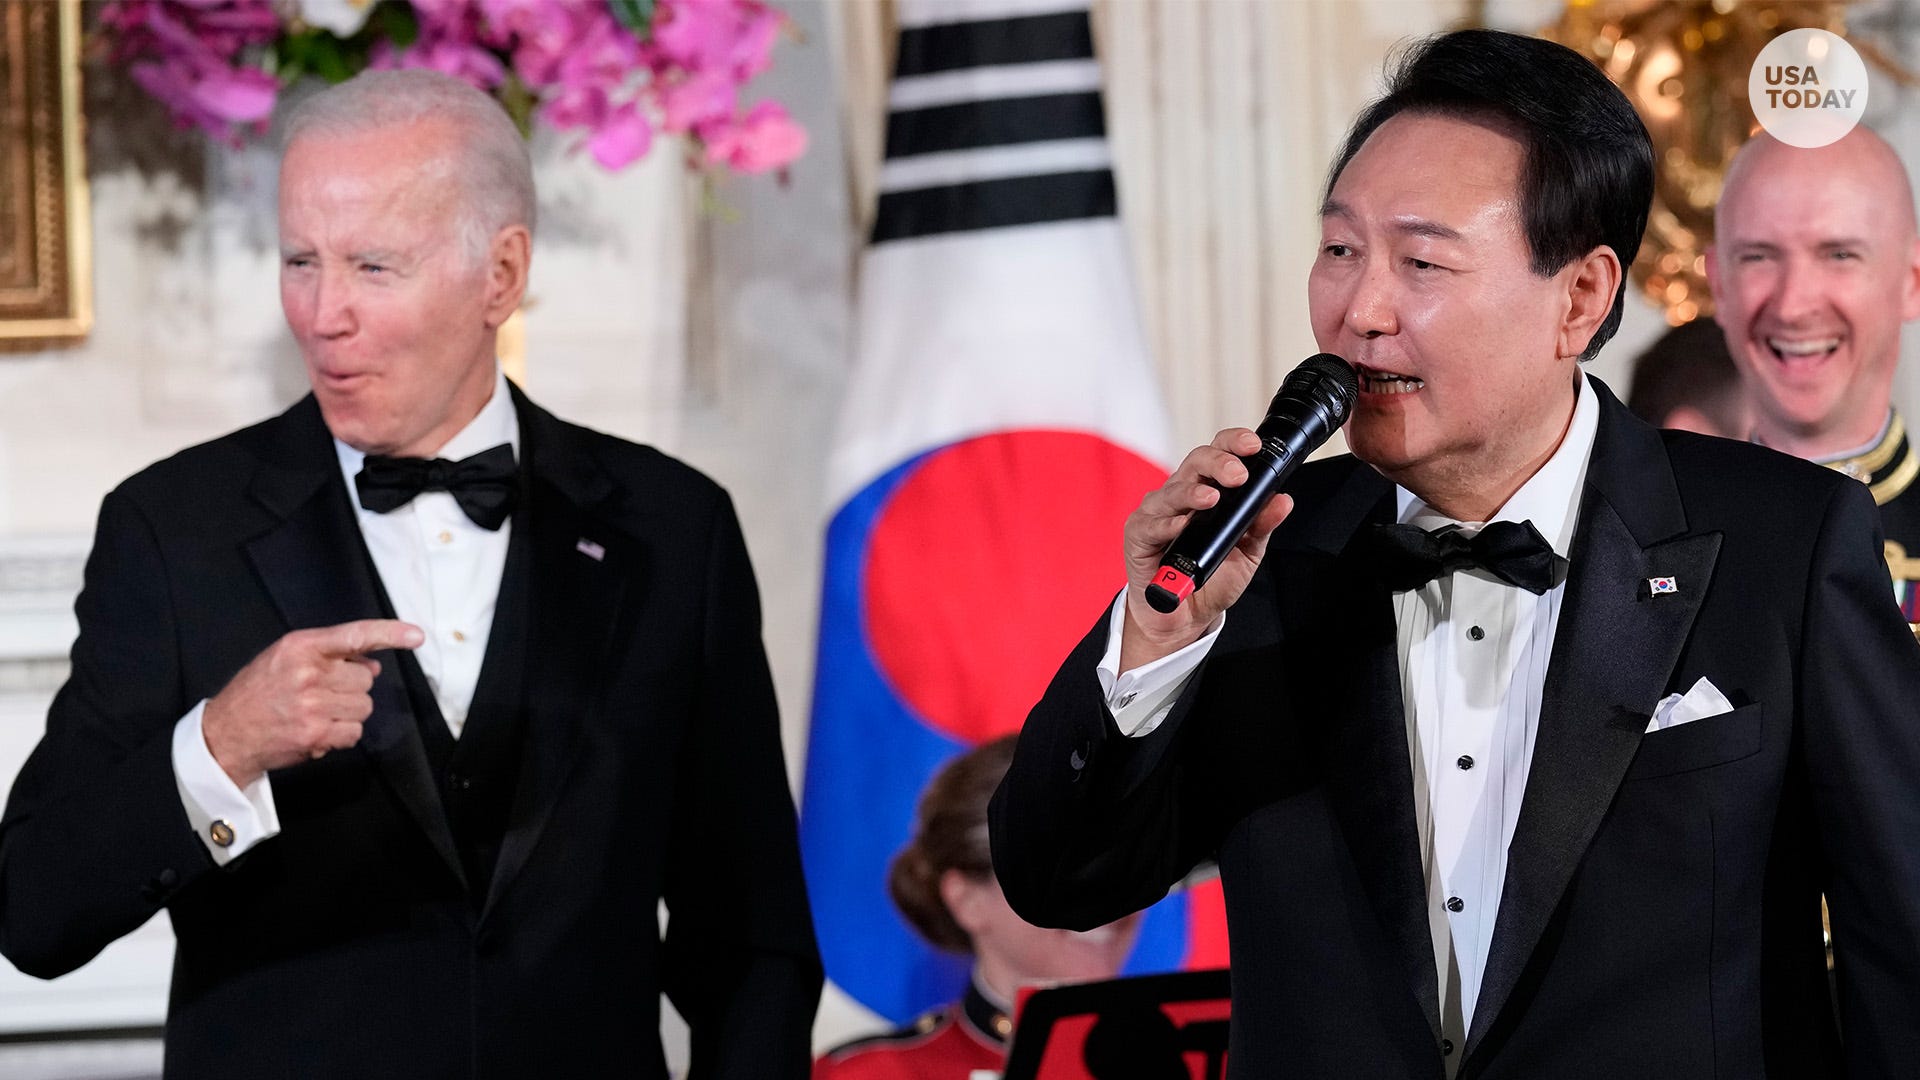 South Korean president sings 'American Pie' at White House state dinner